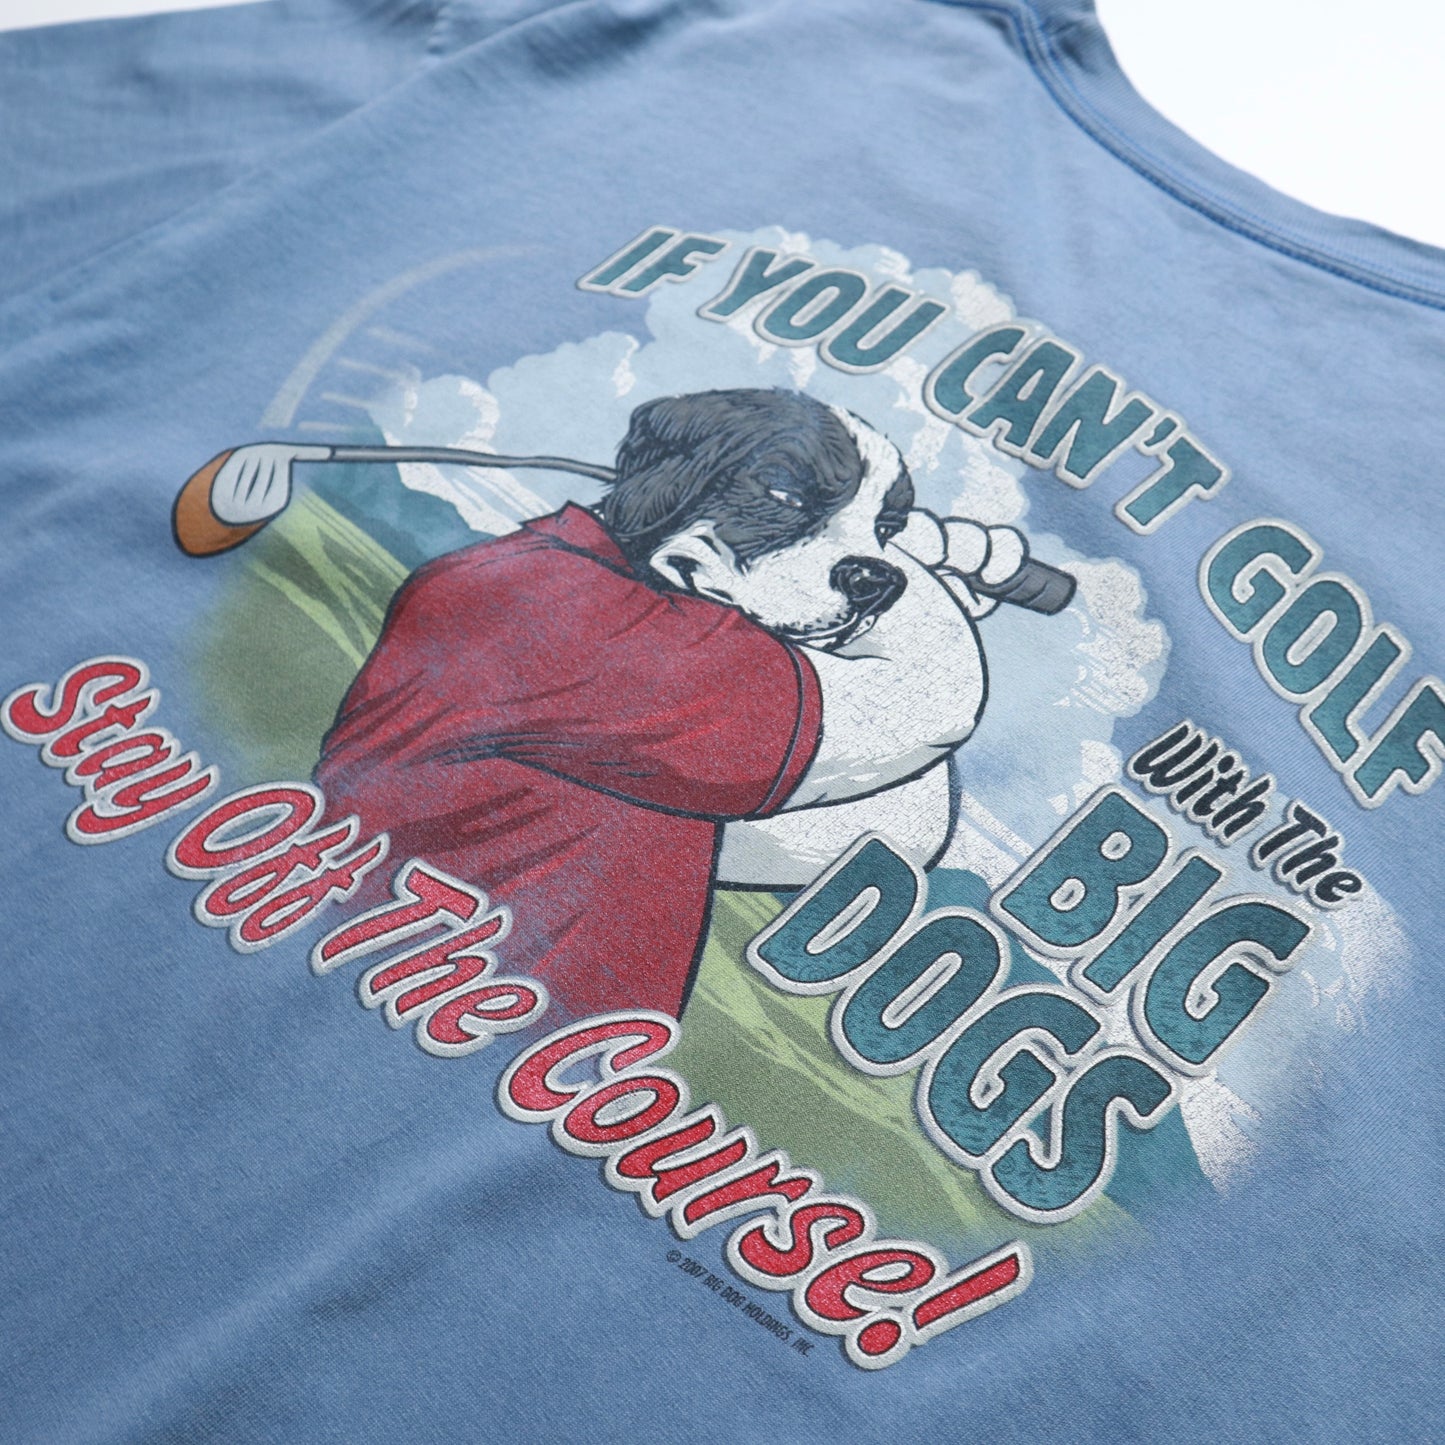 00s Big Dogs Golf T-Shirt